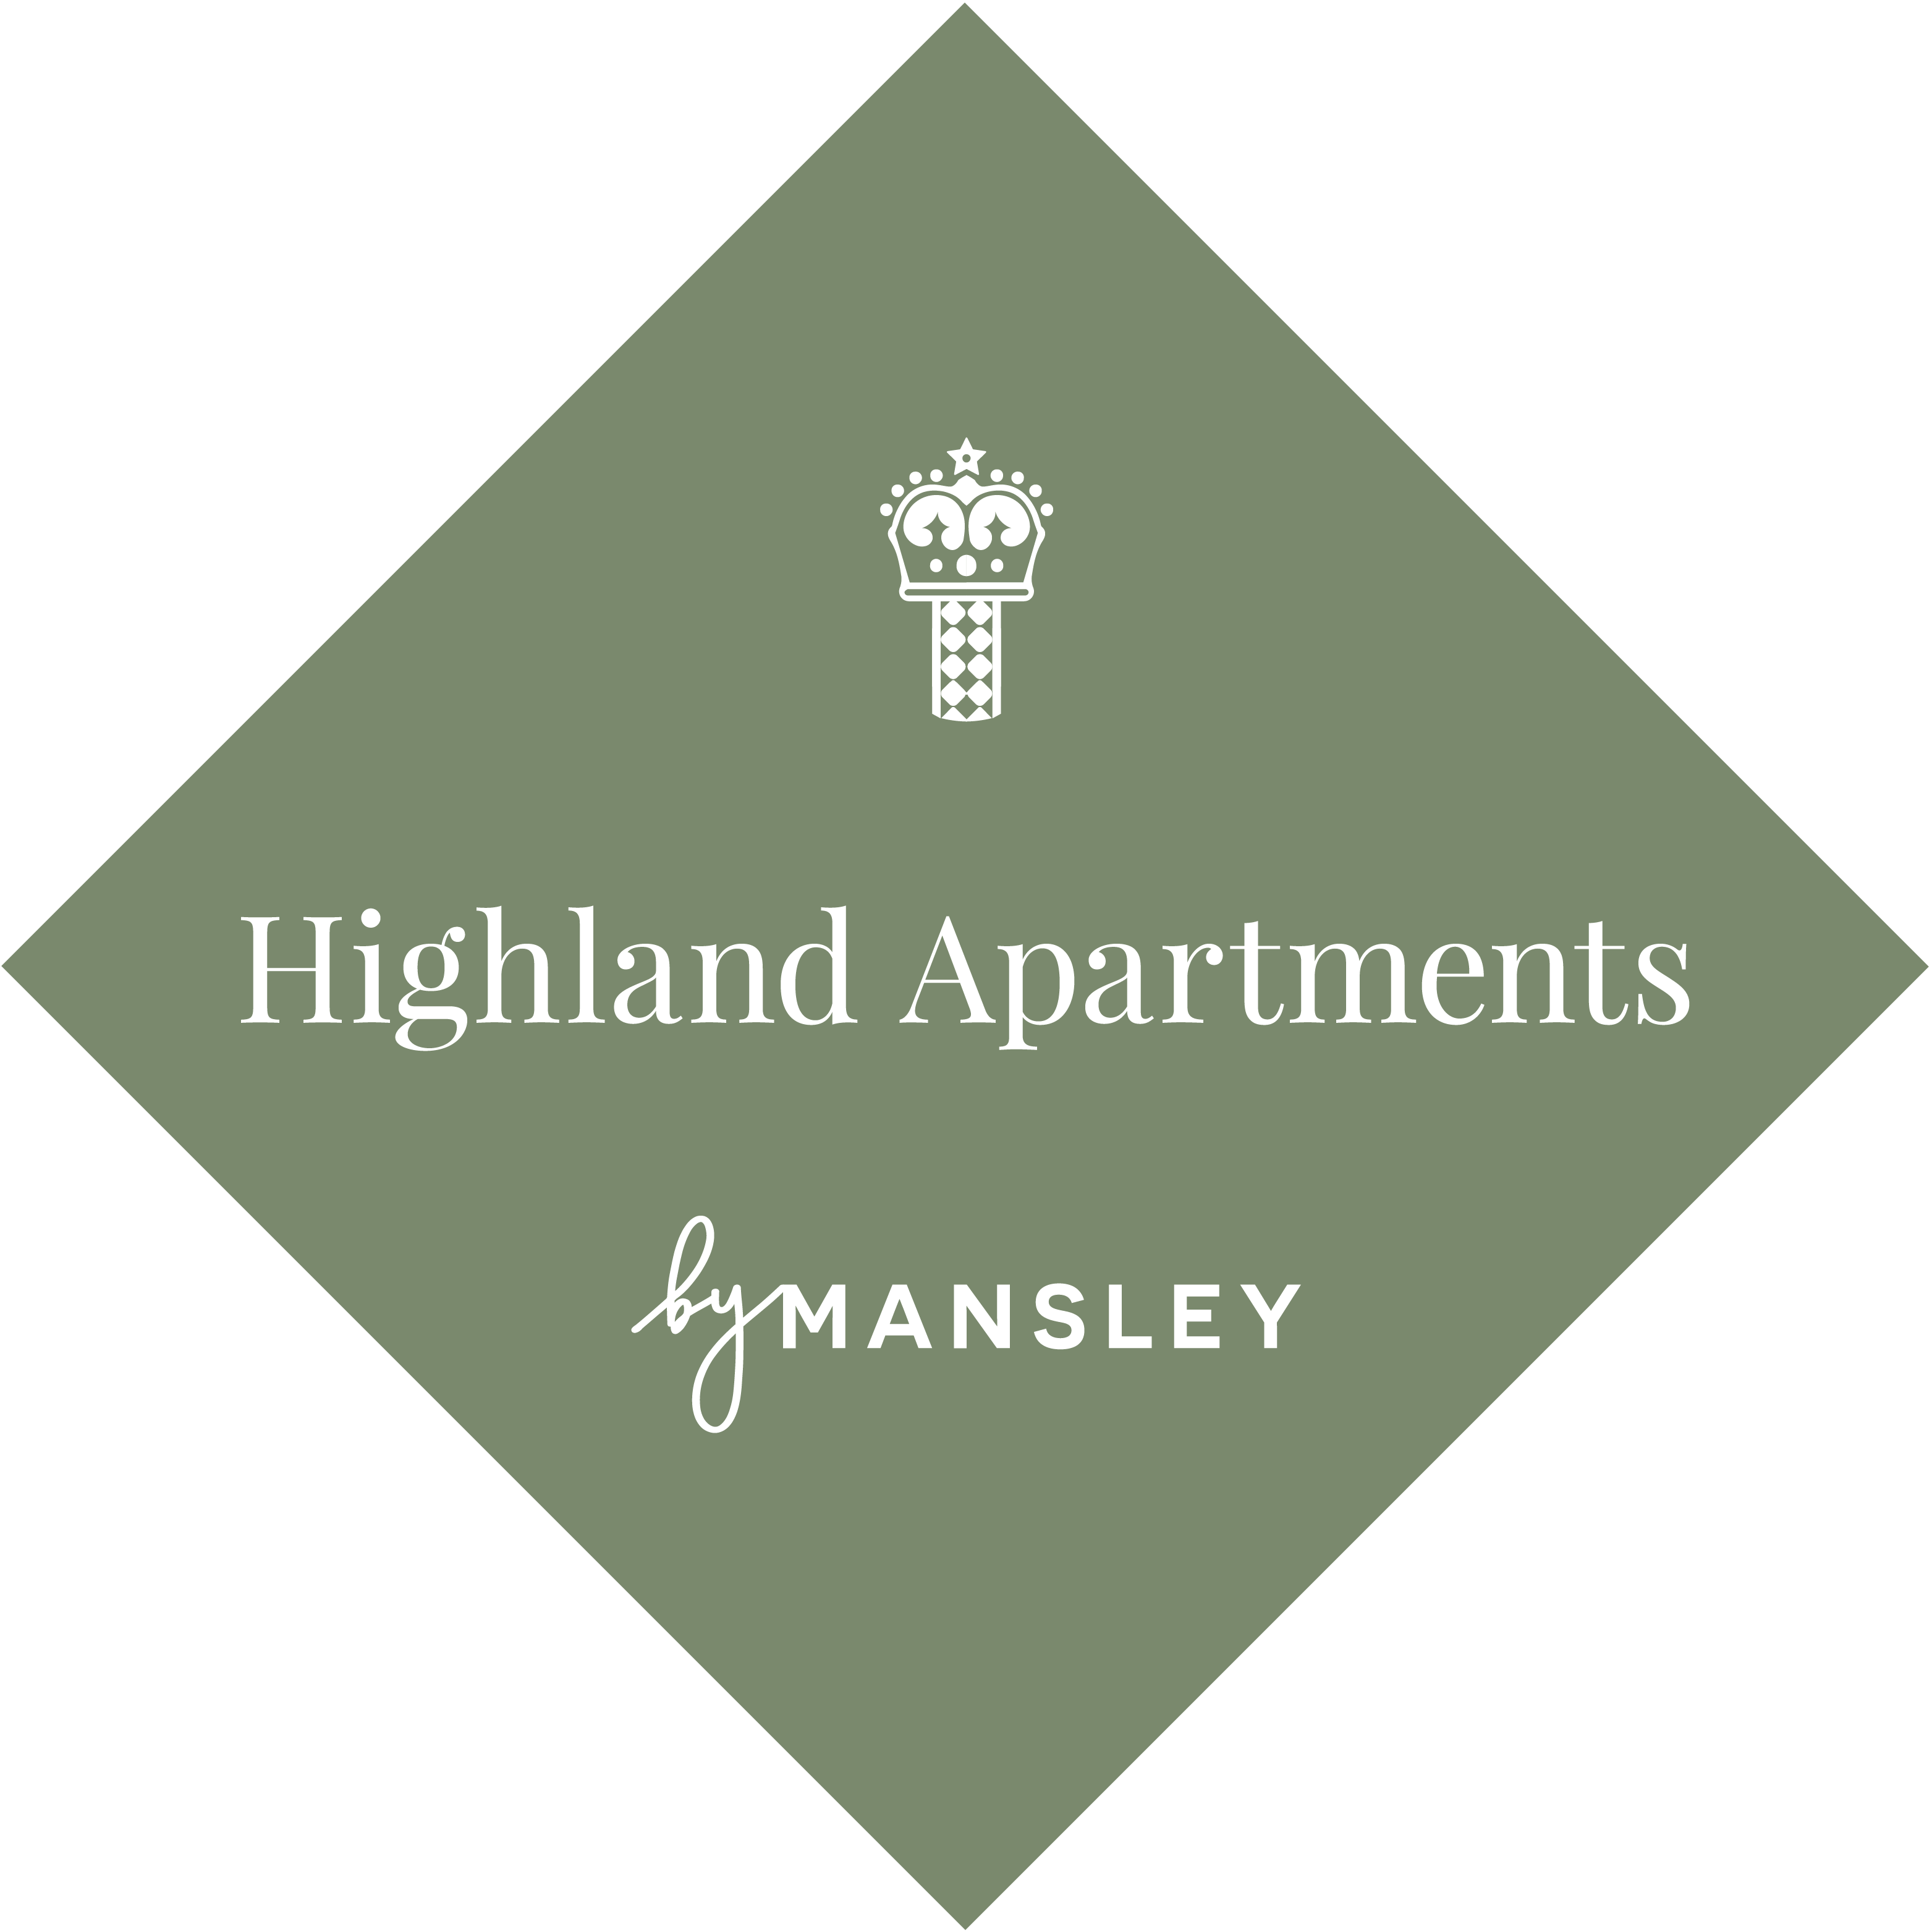 Highland apartments badge